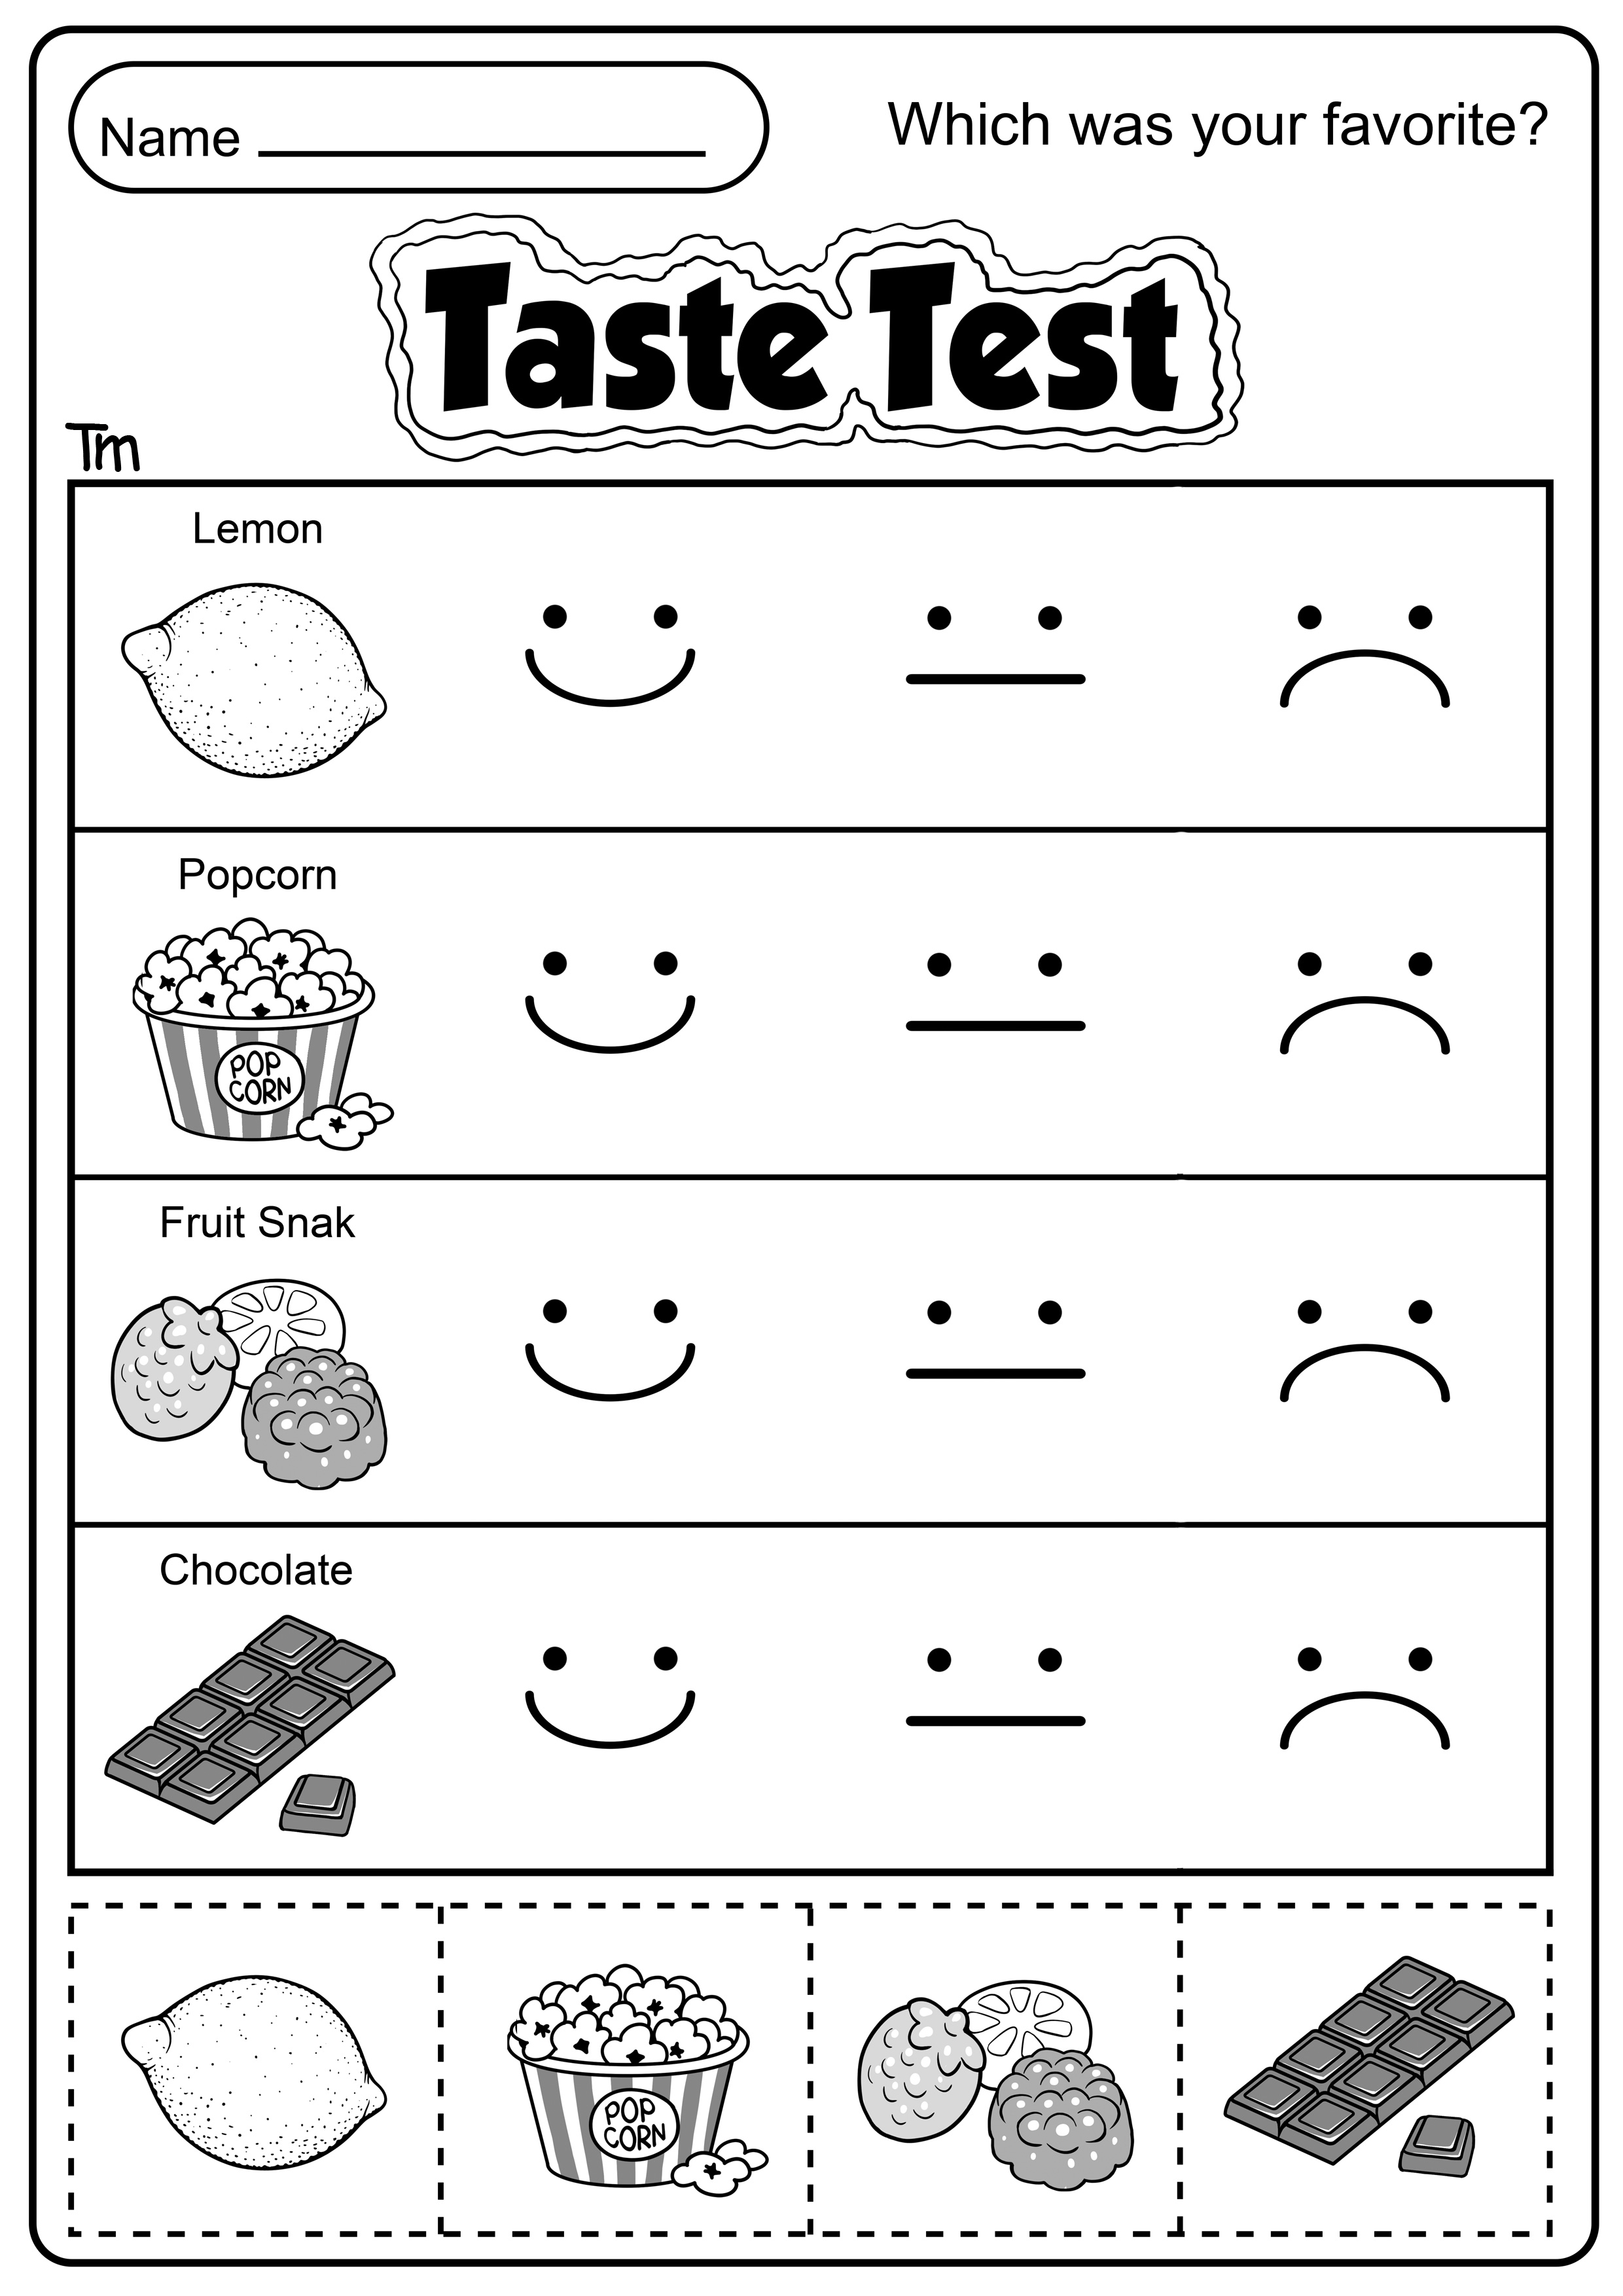 The Five Senses Taste Test